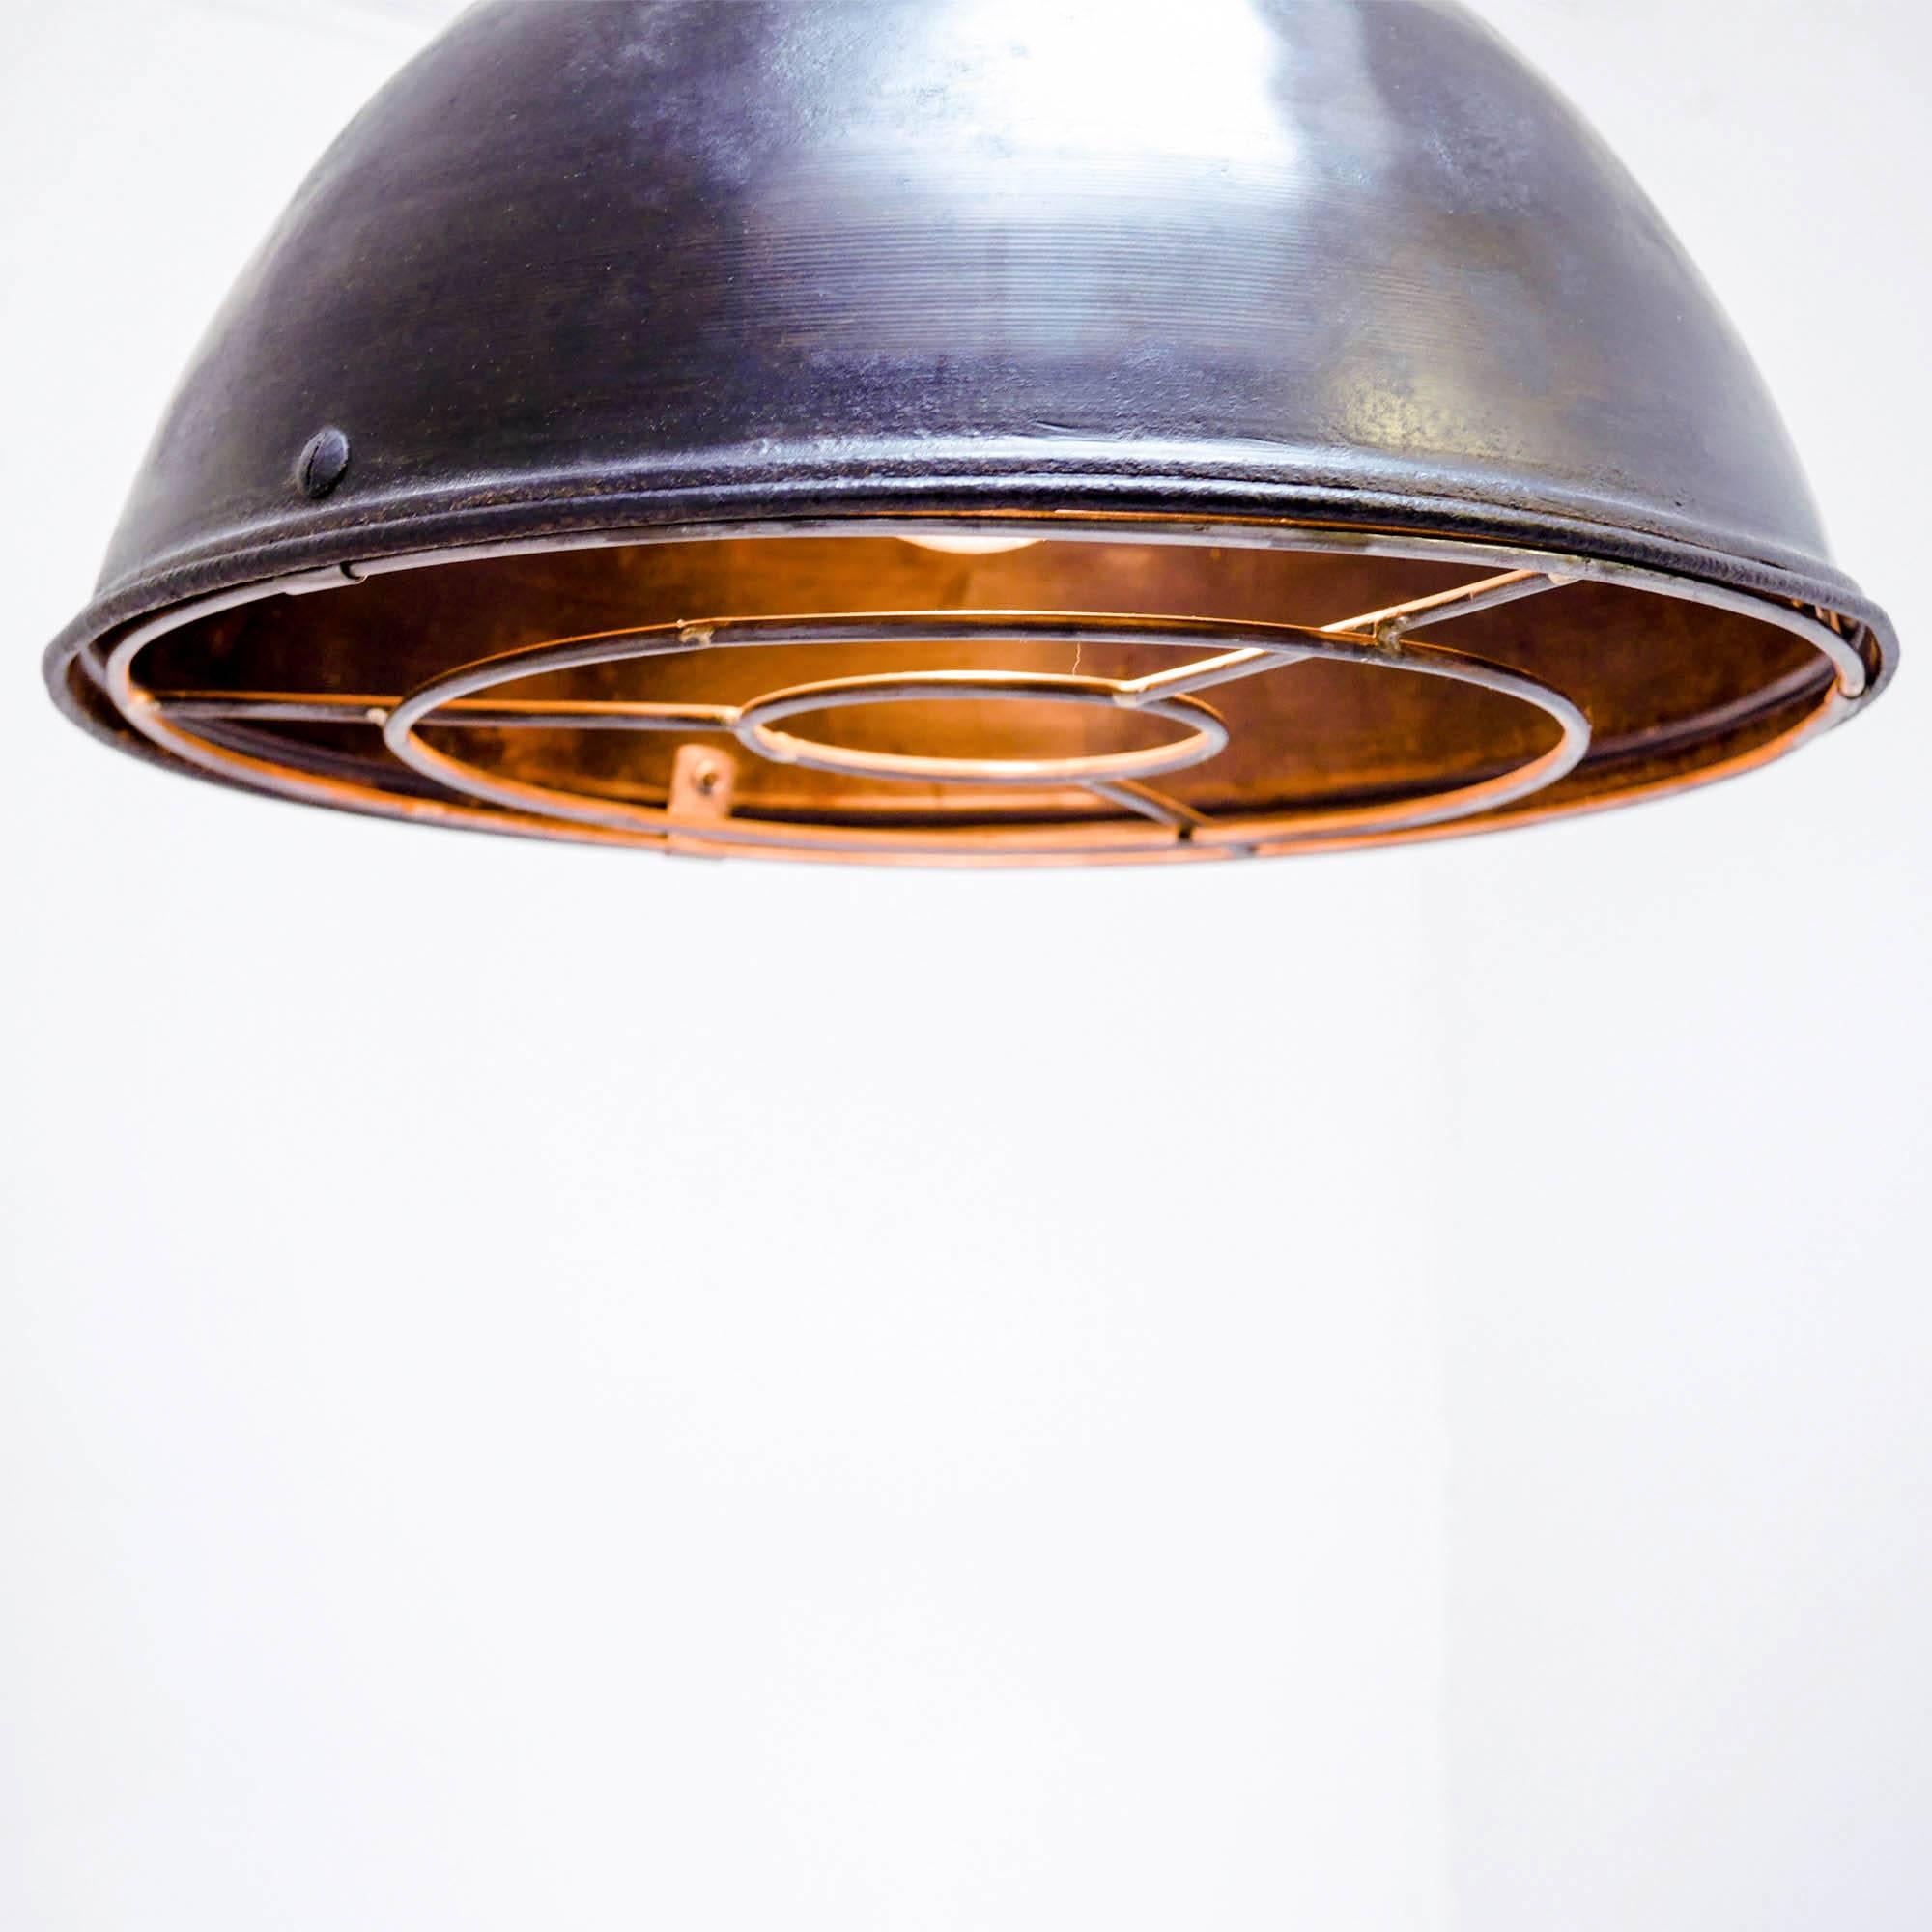 Industrial Ceiling Lamp “Filament”, France, Circa 1950